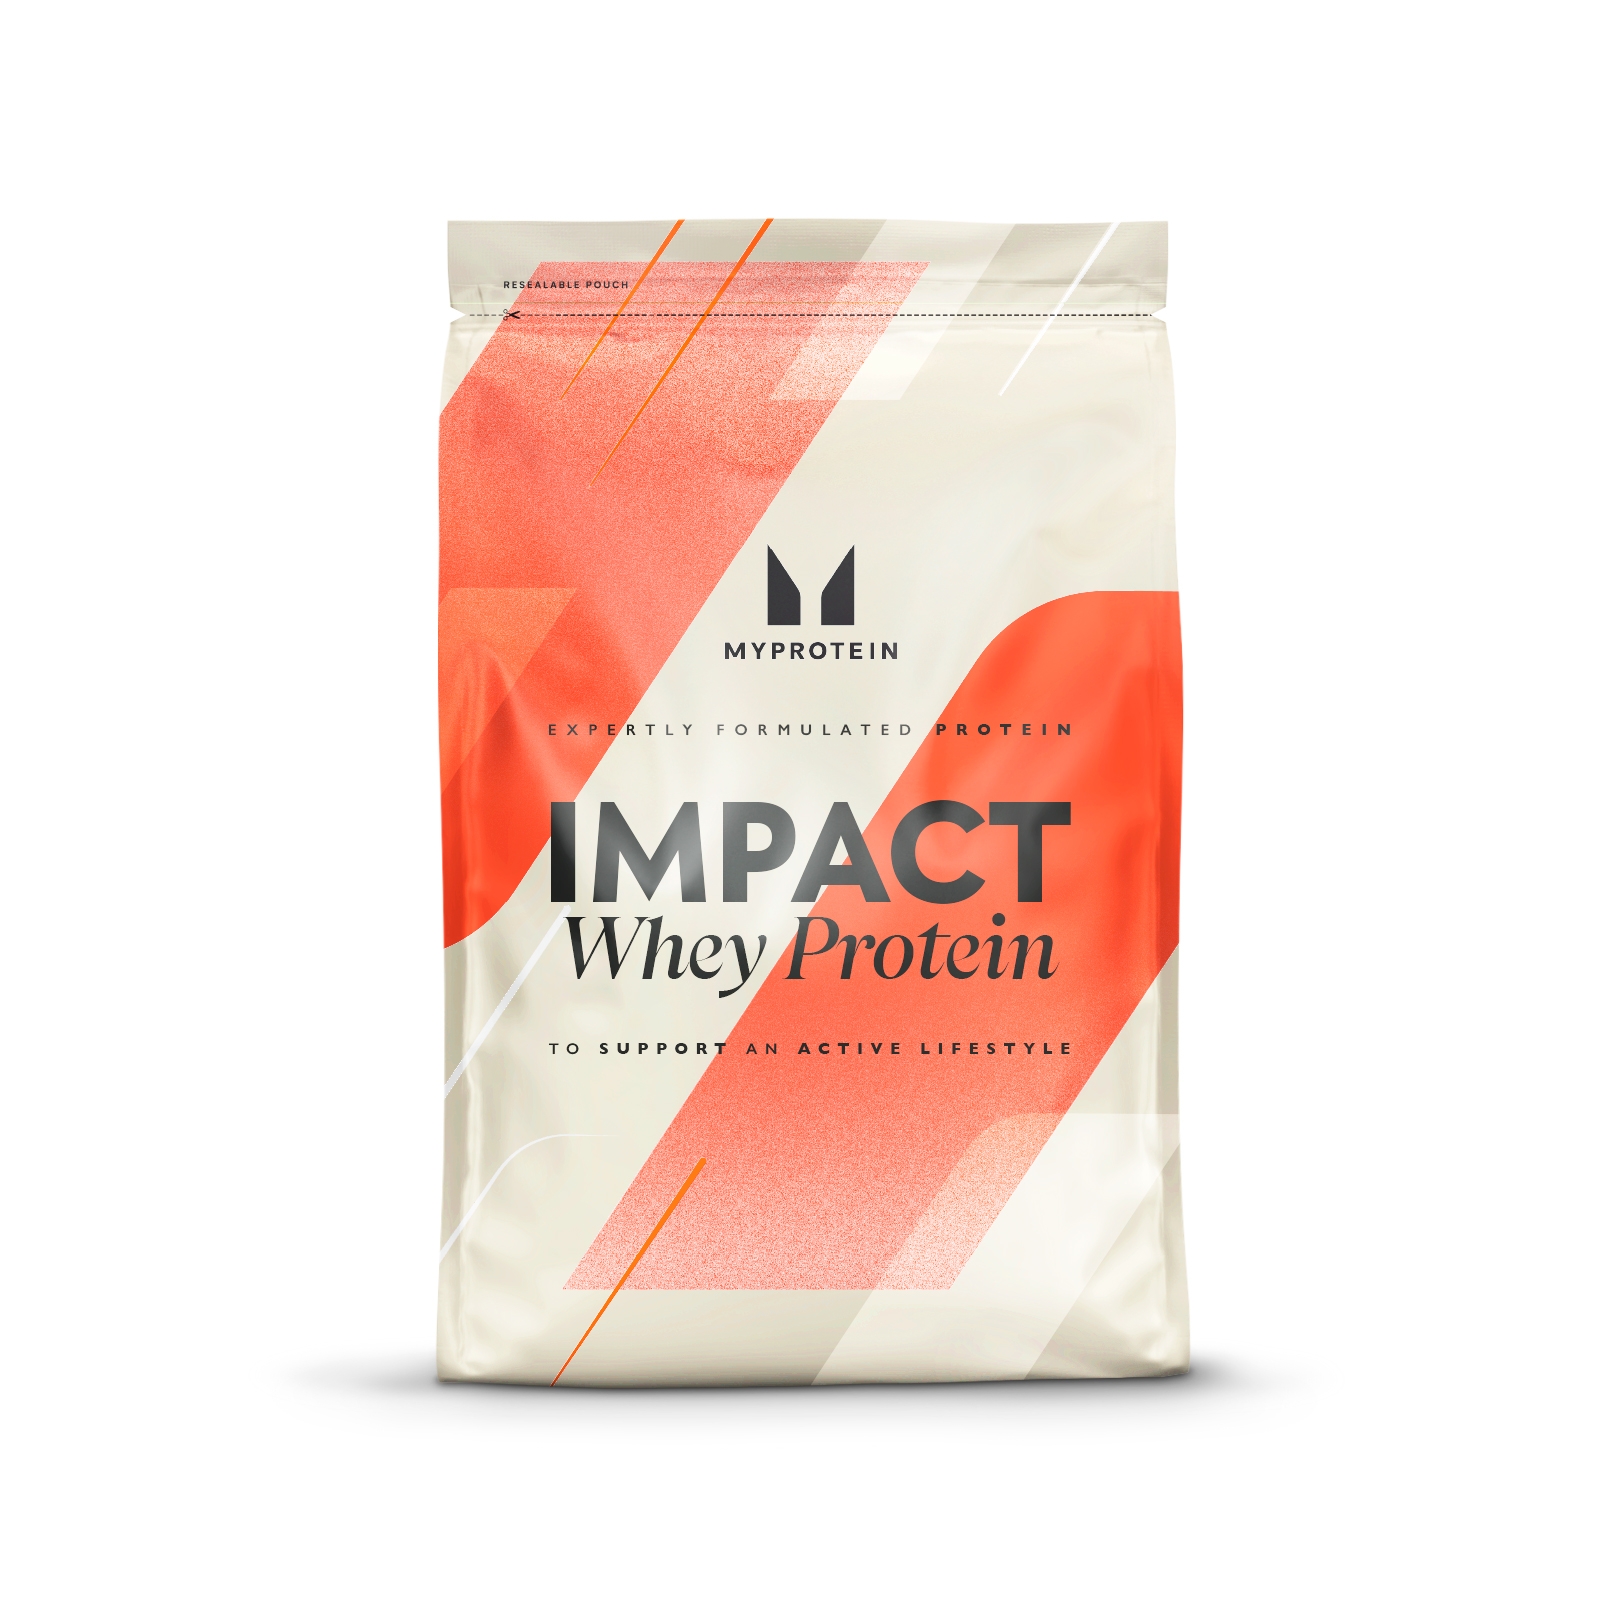 Myprotein Impact Whey Protein - 2.5kg - Natural Banana